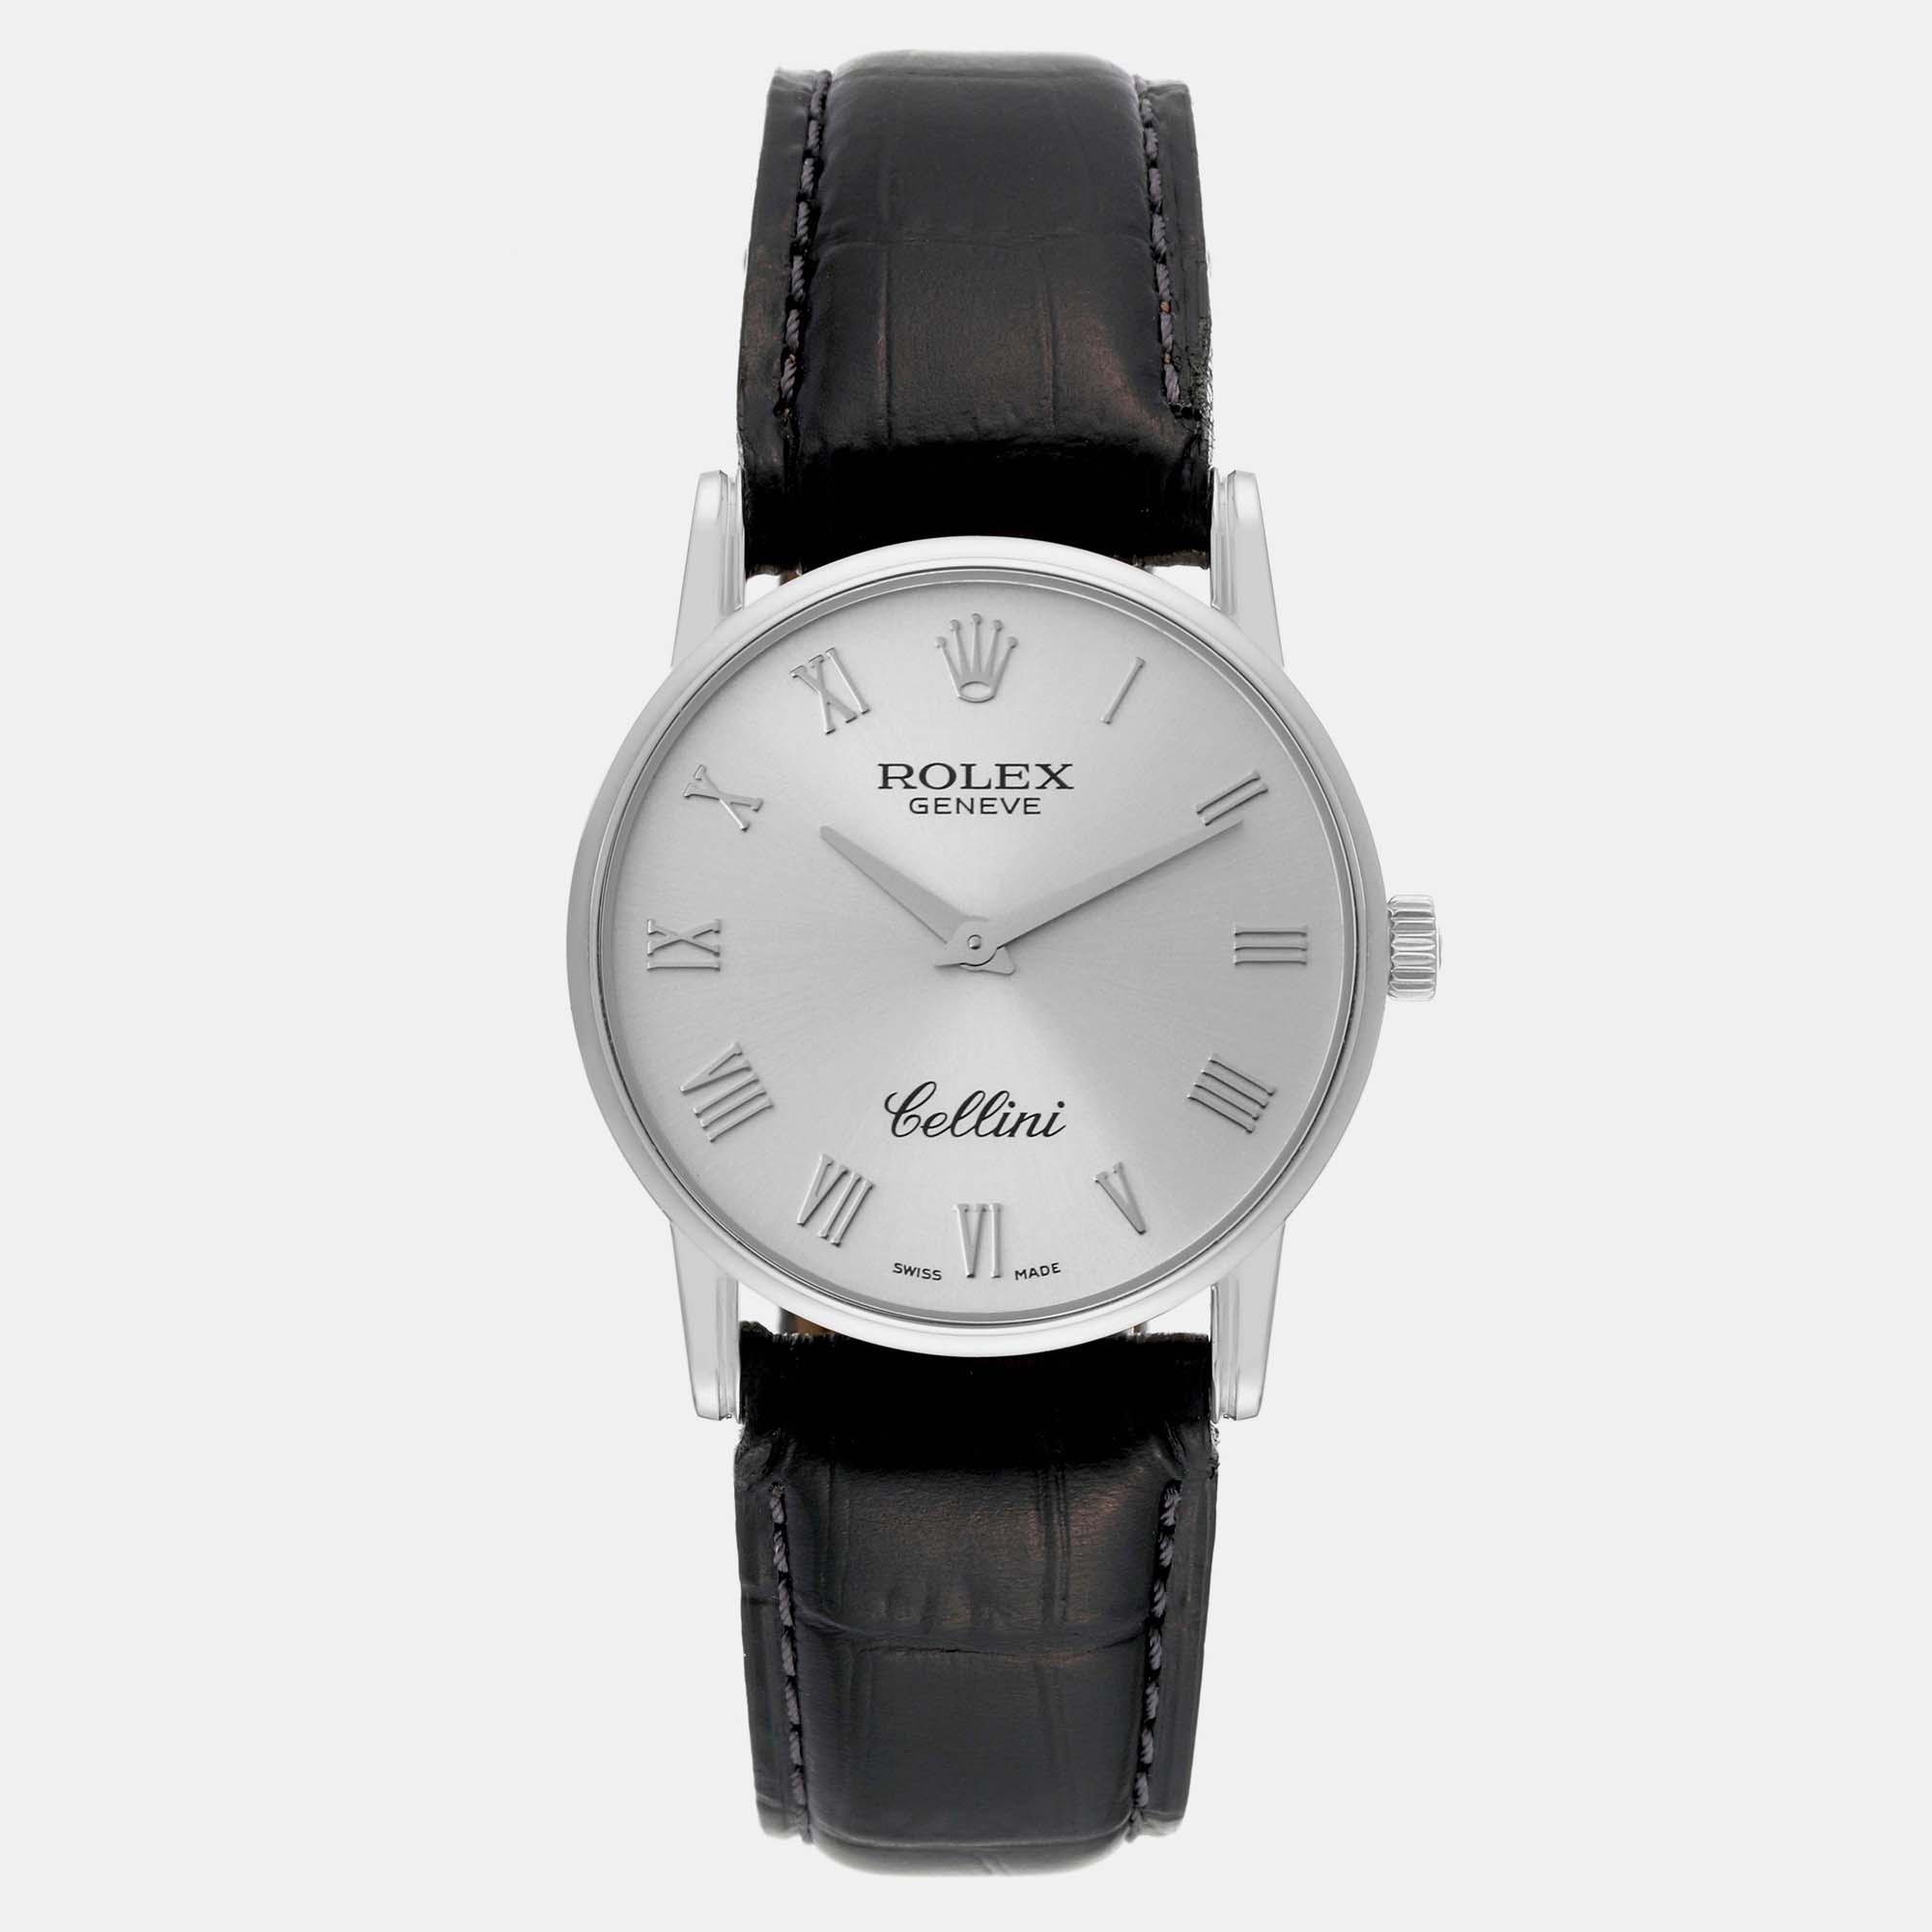 Rolex cellini classic silver dial white gold men's watch 31.8 mm